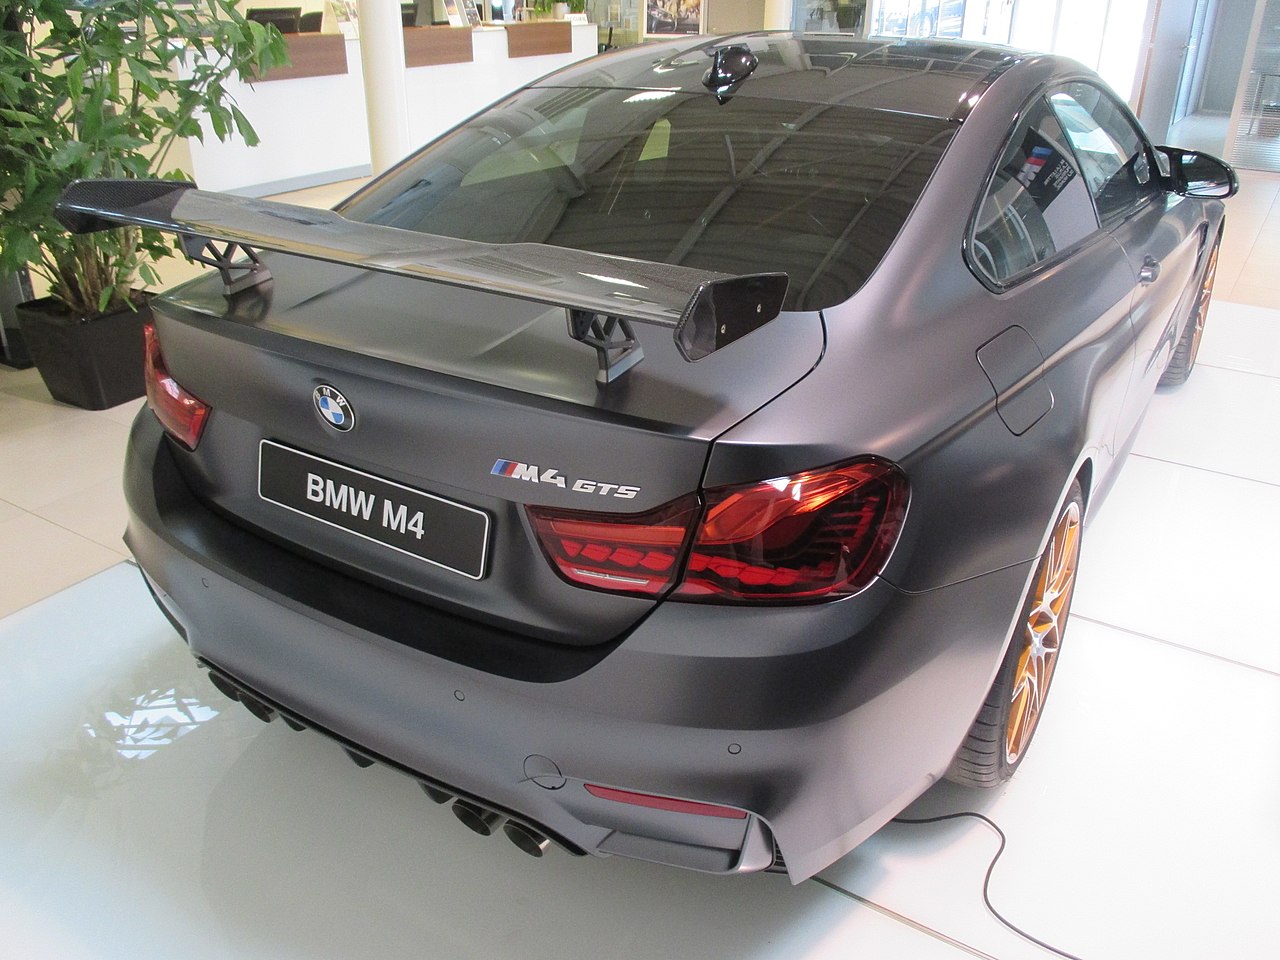 Image of BMW M4 GTS 02